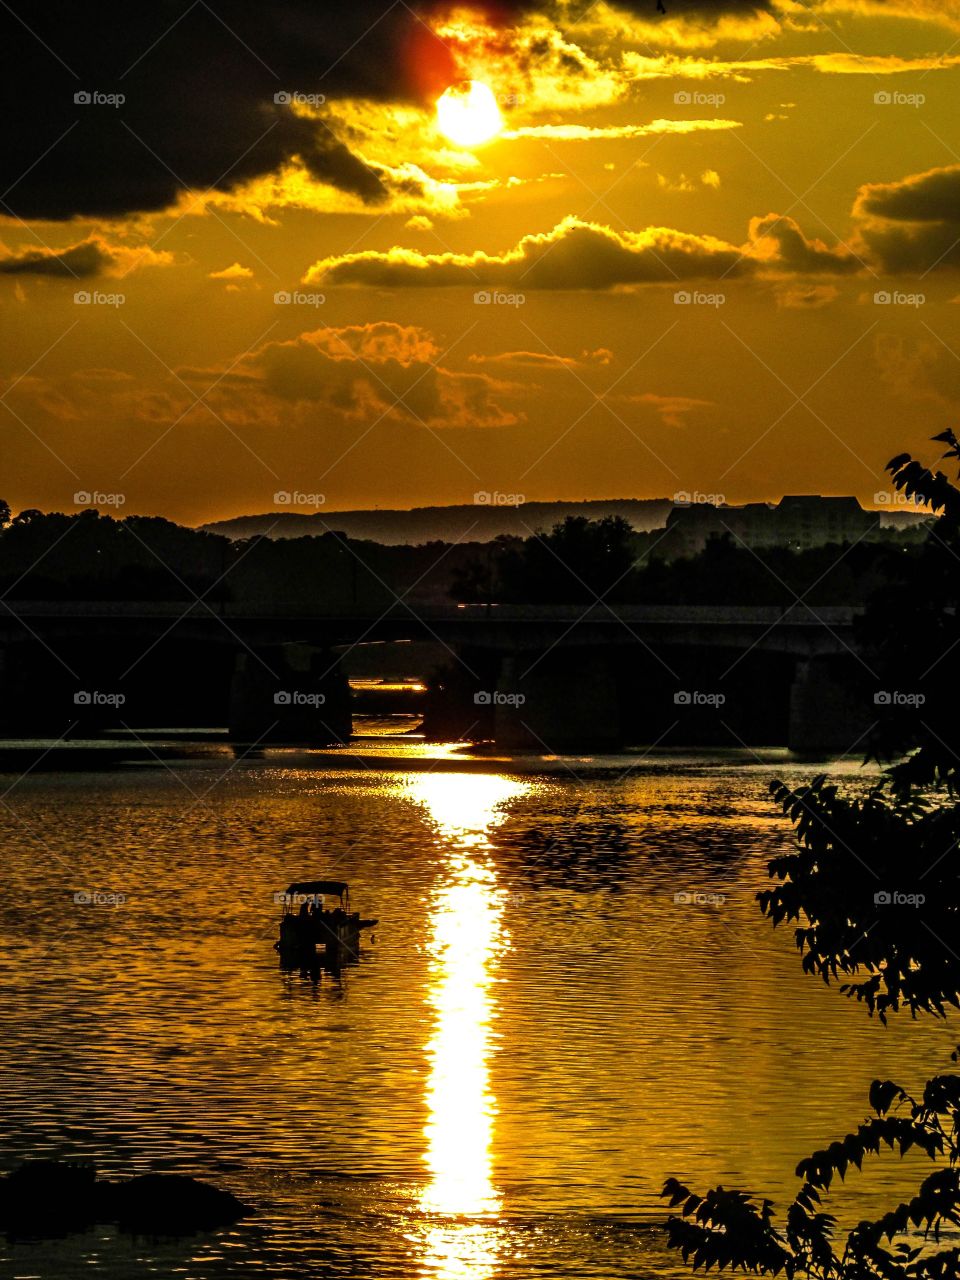 Susquehanna River sunset